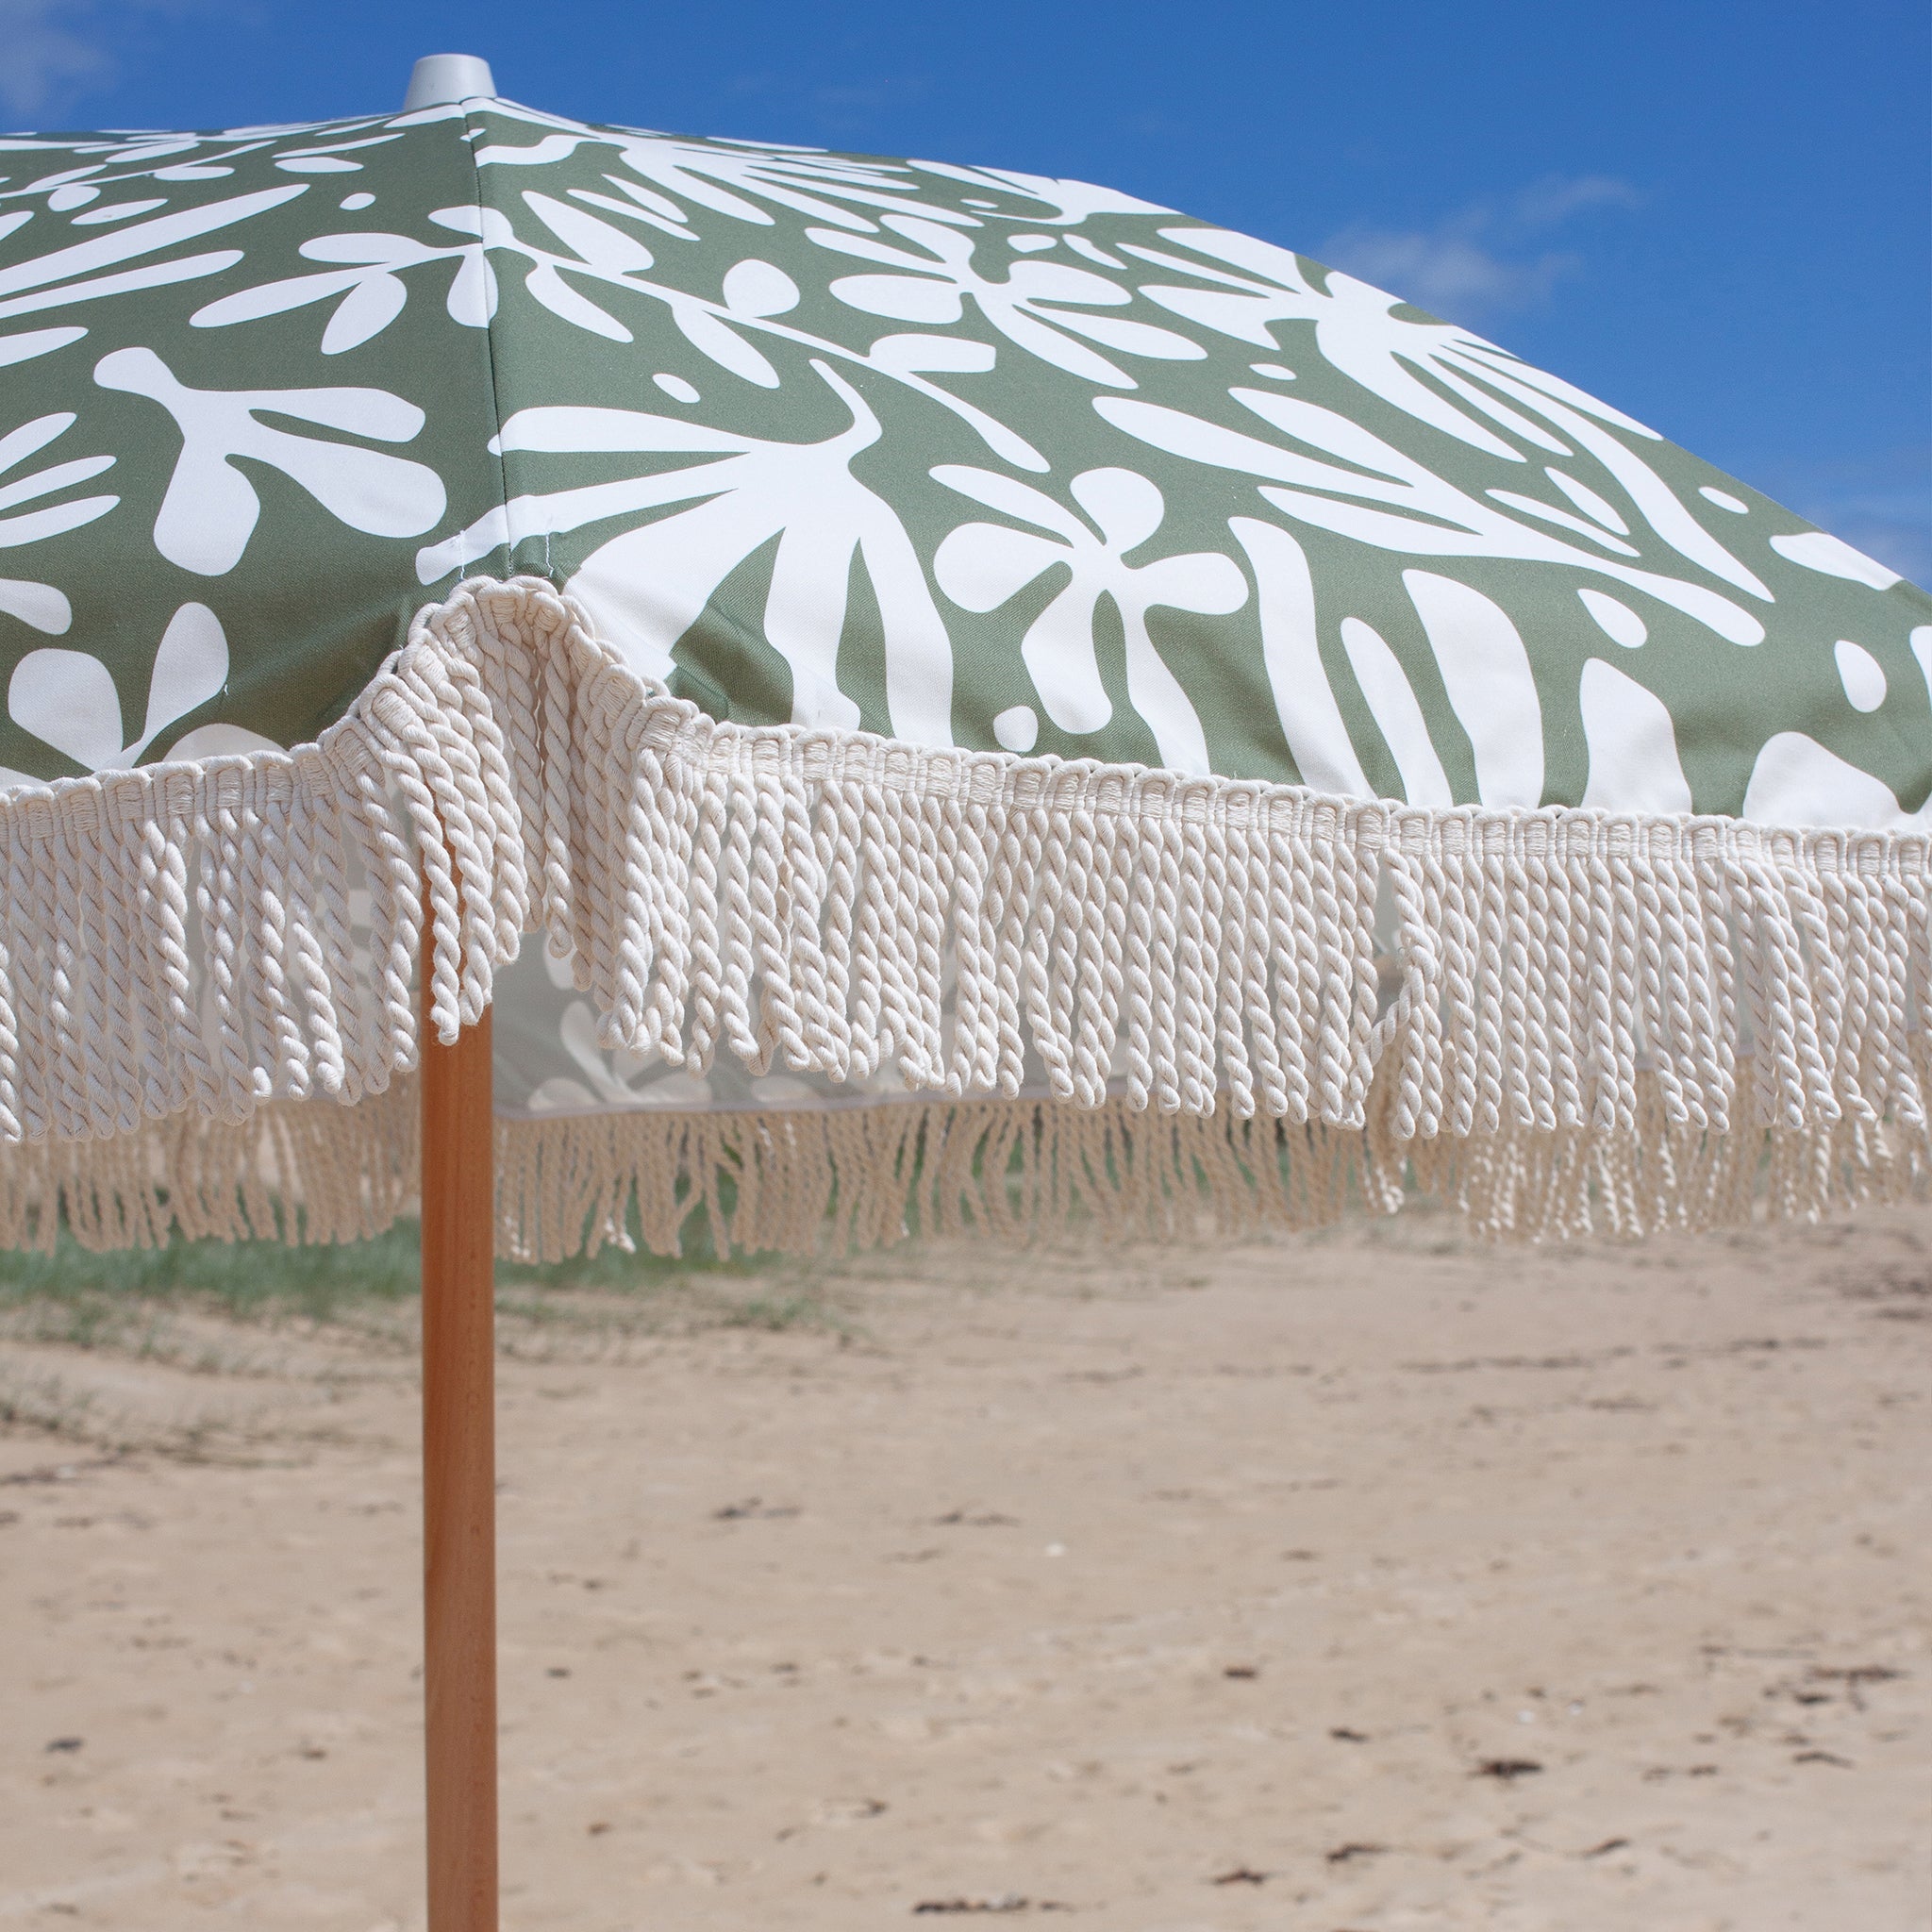 Luxe Beach Umbrella | The Vacay Olive